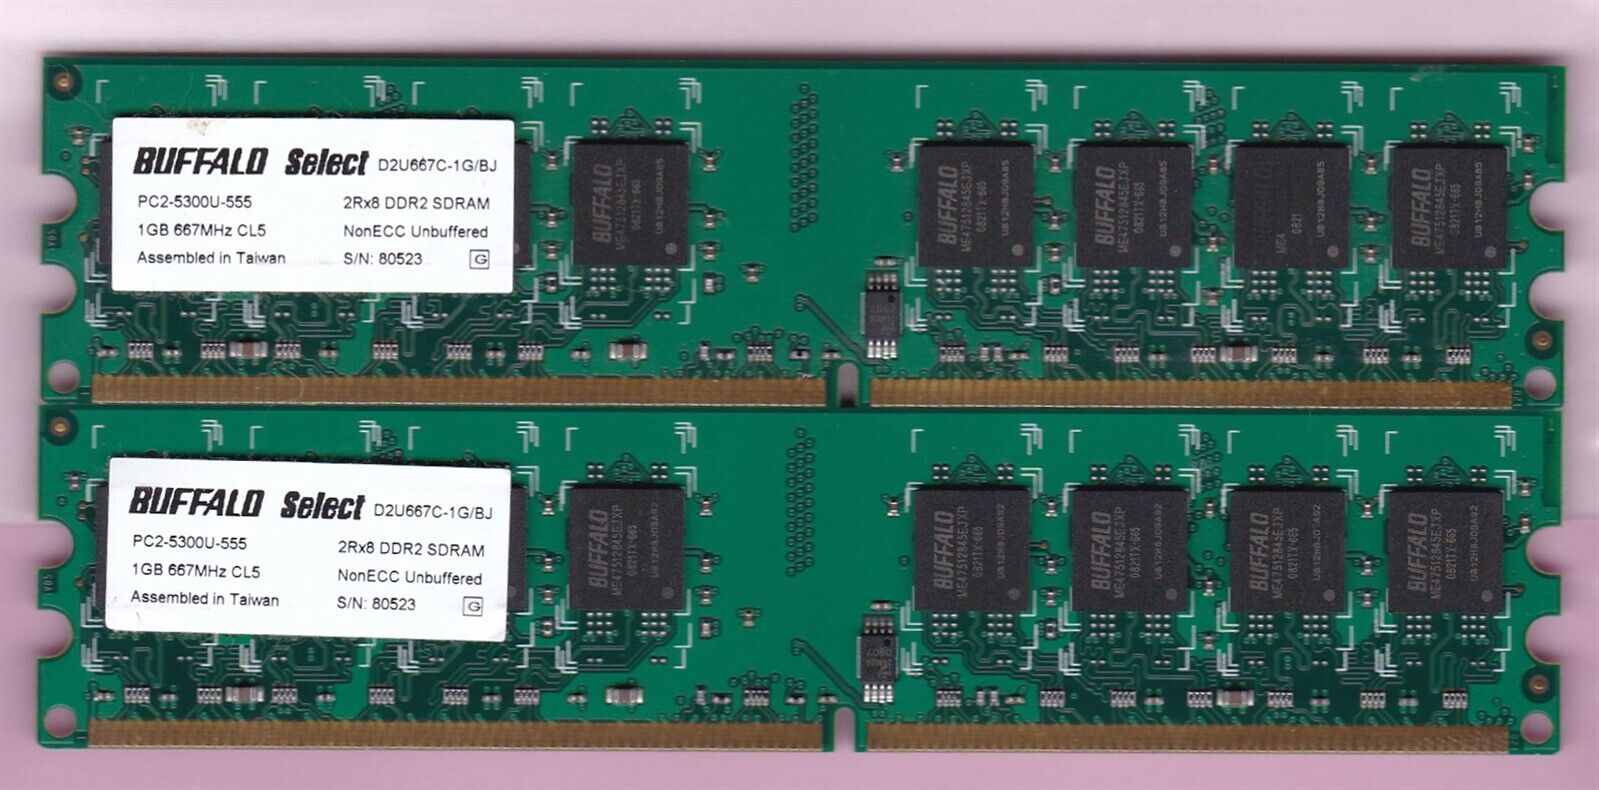 2GB 2x1GB PC2-5300 BUFFALO SELECT D2U667C-1G/BJ DDR2-667 Desktop Ram Memory Kit